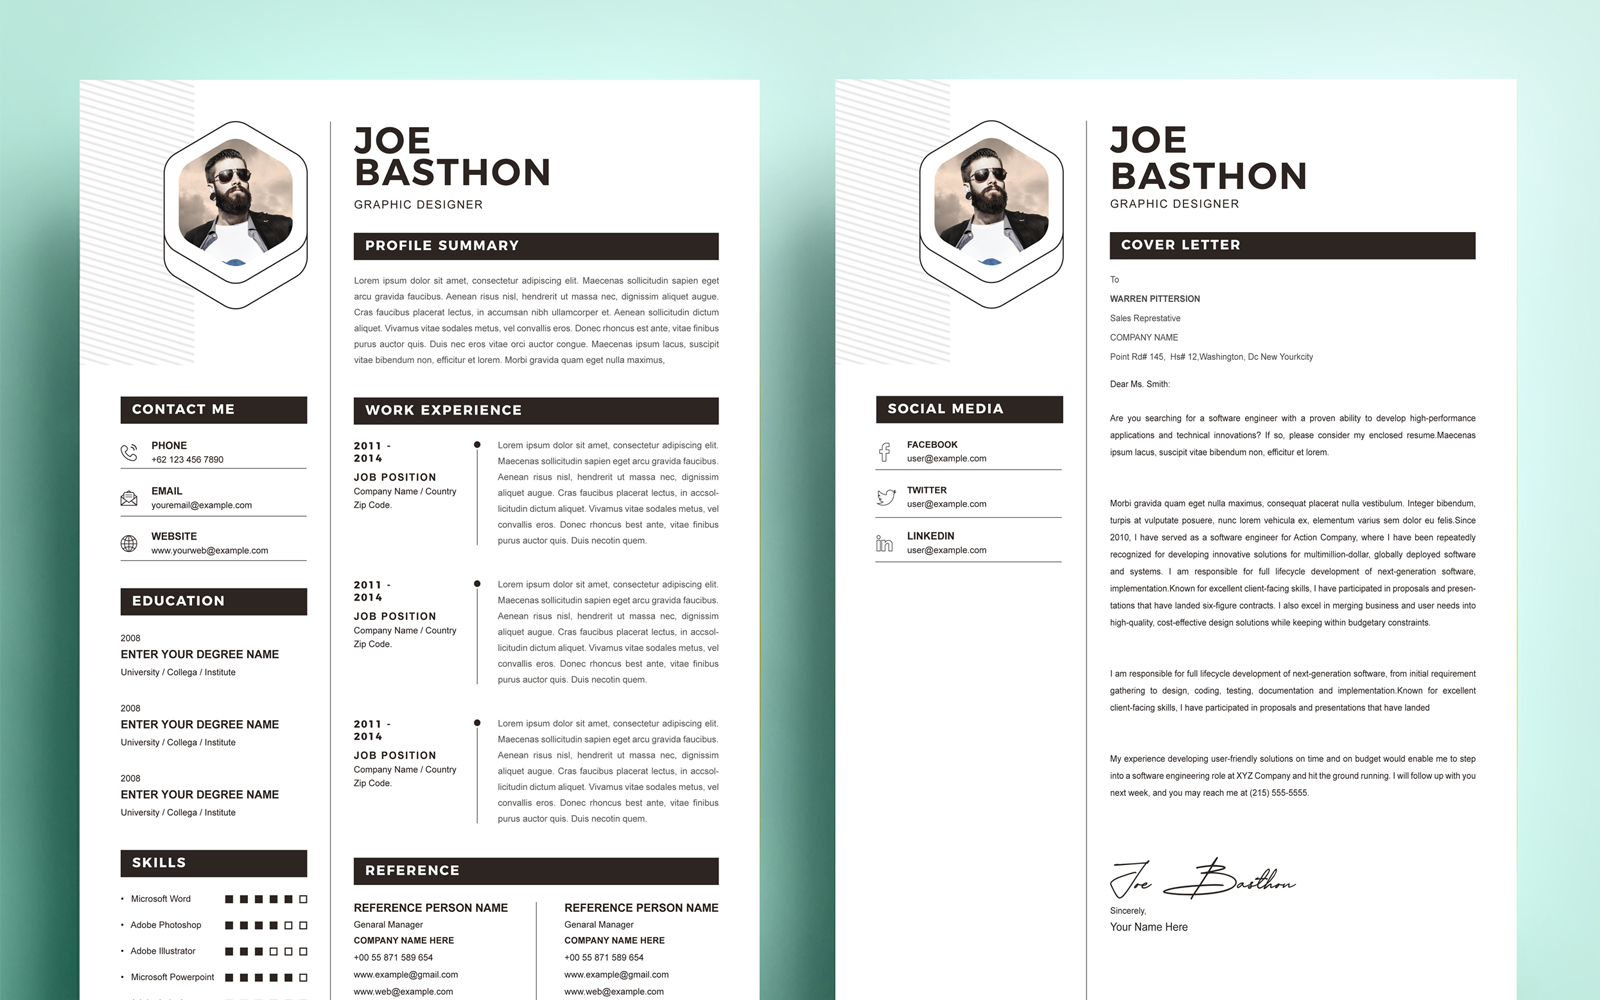 Joe Basthon - Printable Resume Templates 2021